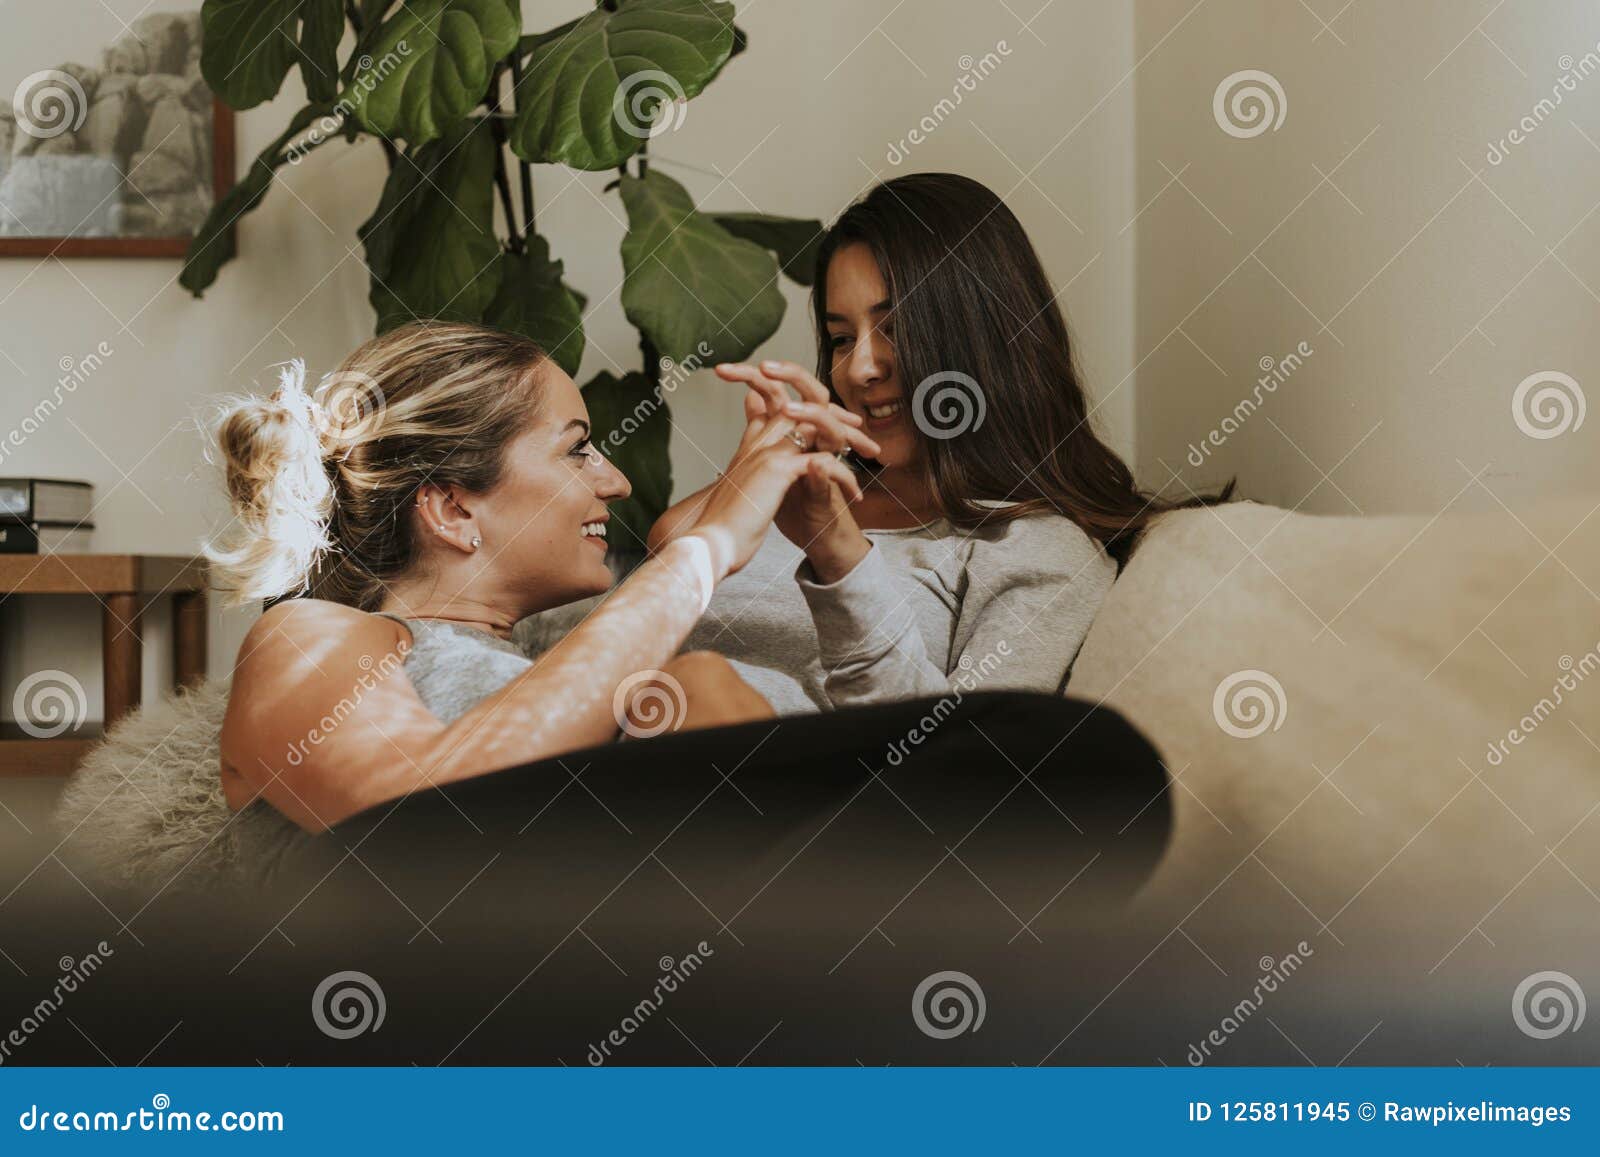 Sweet Lesbian Couple On The Sofa Stock Image Image Of